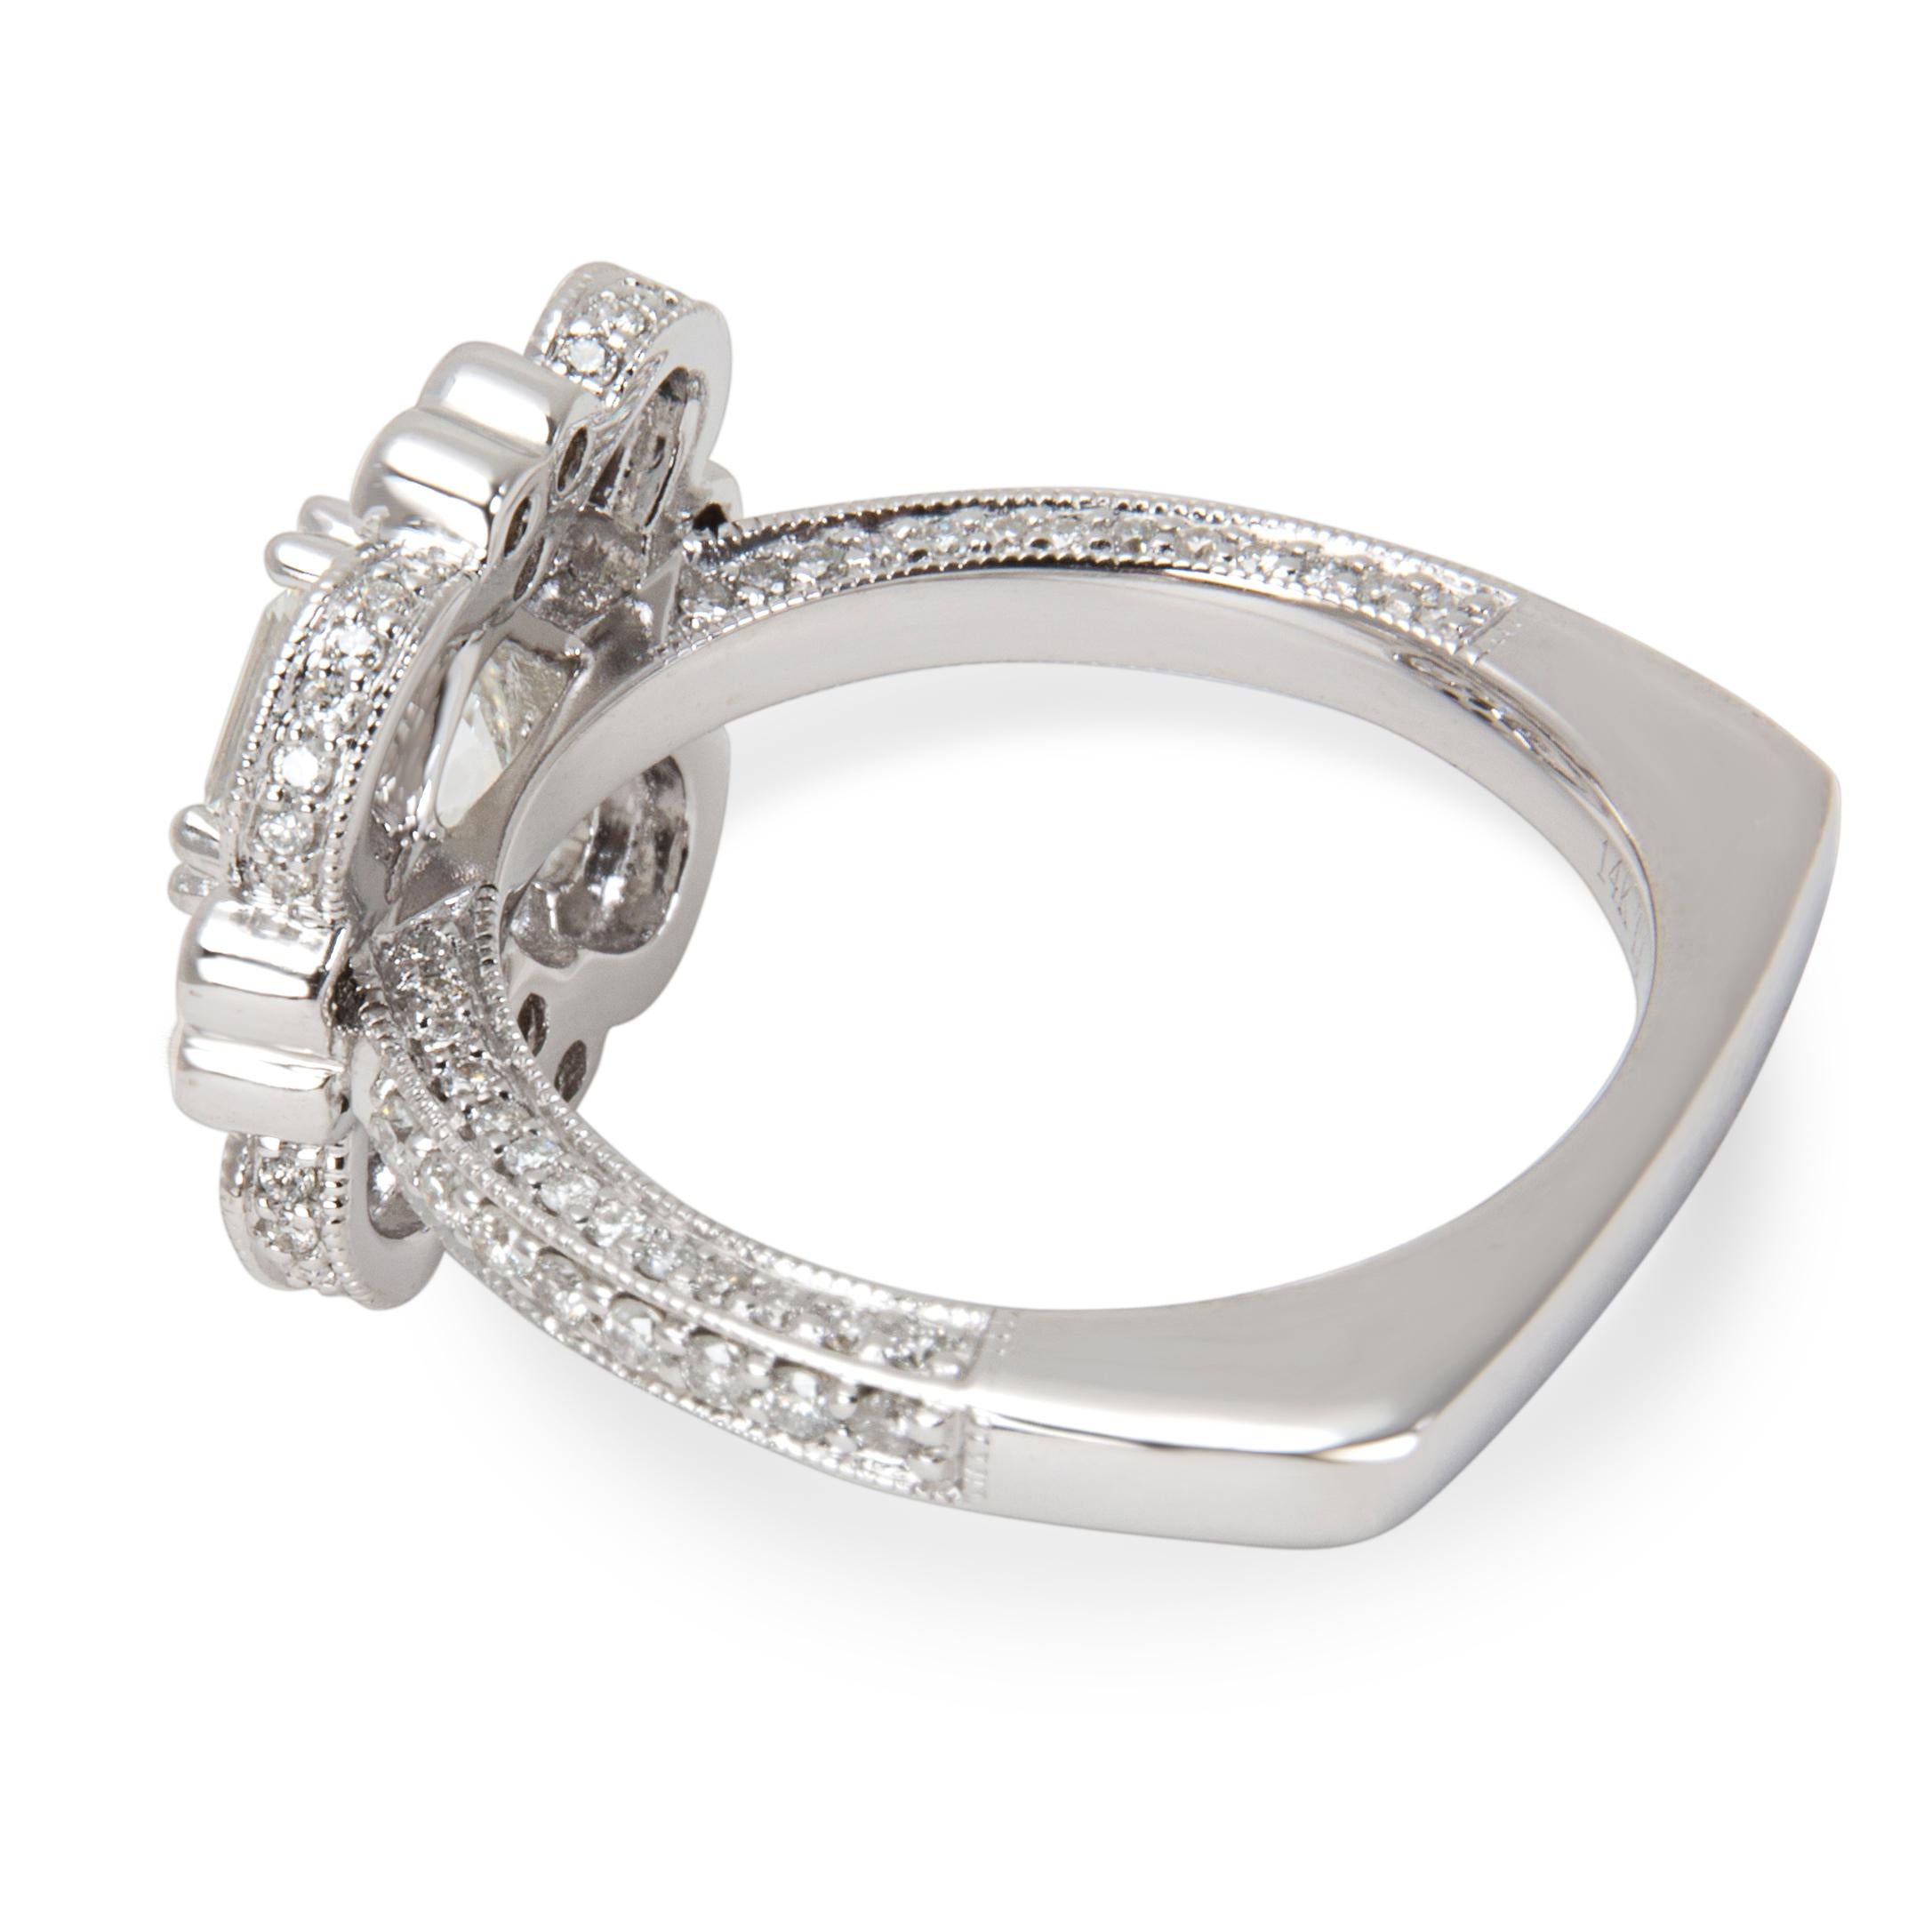 Asscher Cut Tolkowsky Diamond Ring in 14 Karat White Gold GIA Certified G VVS1 '2.20 Carat'